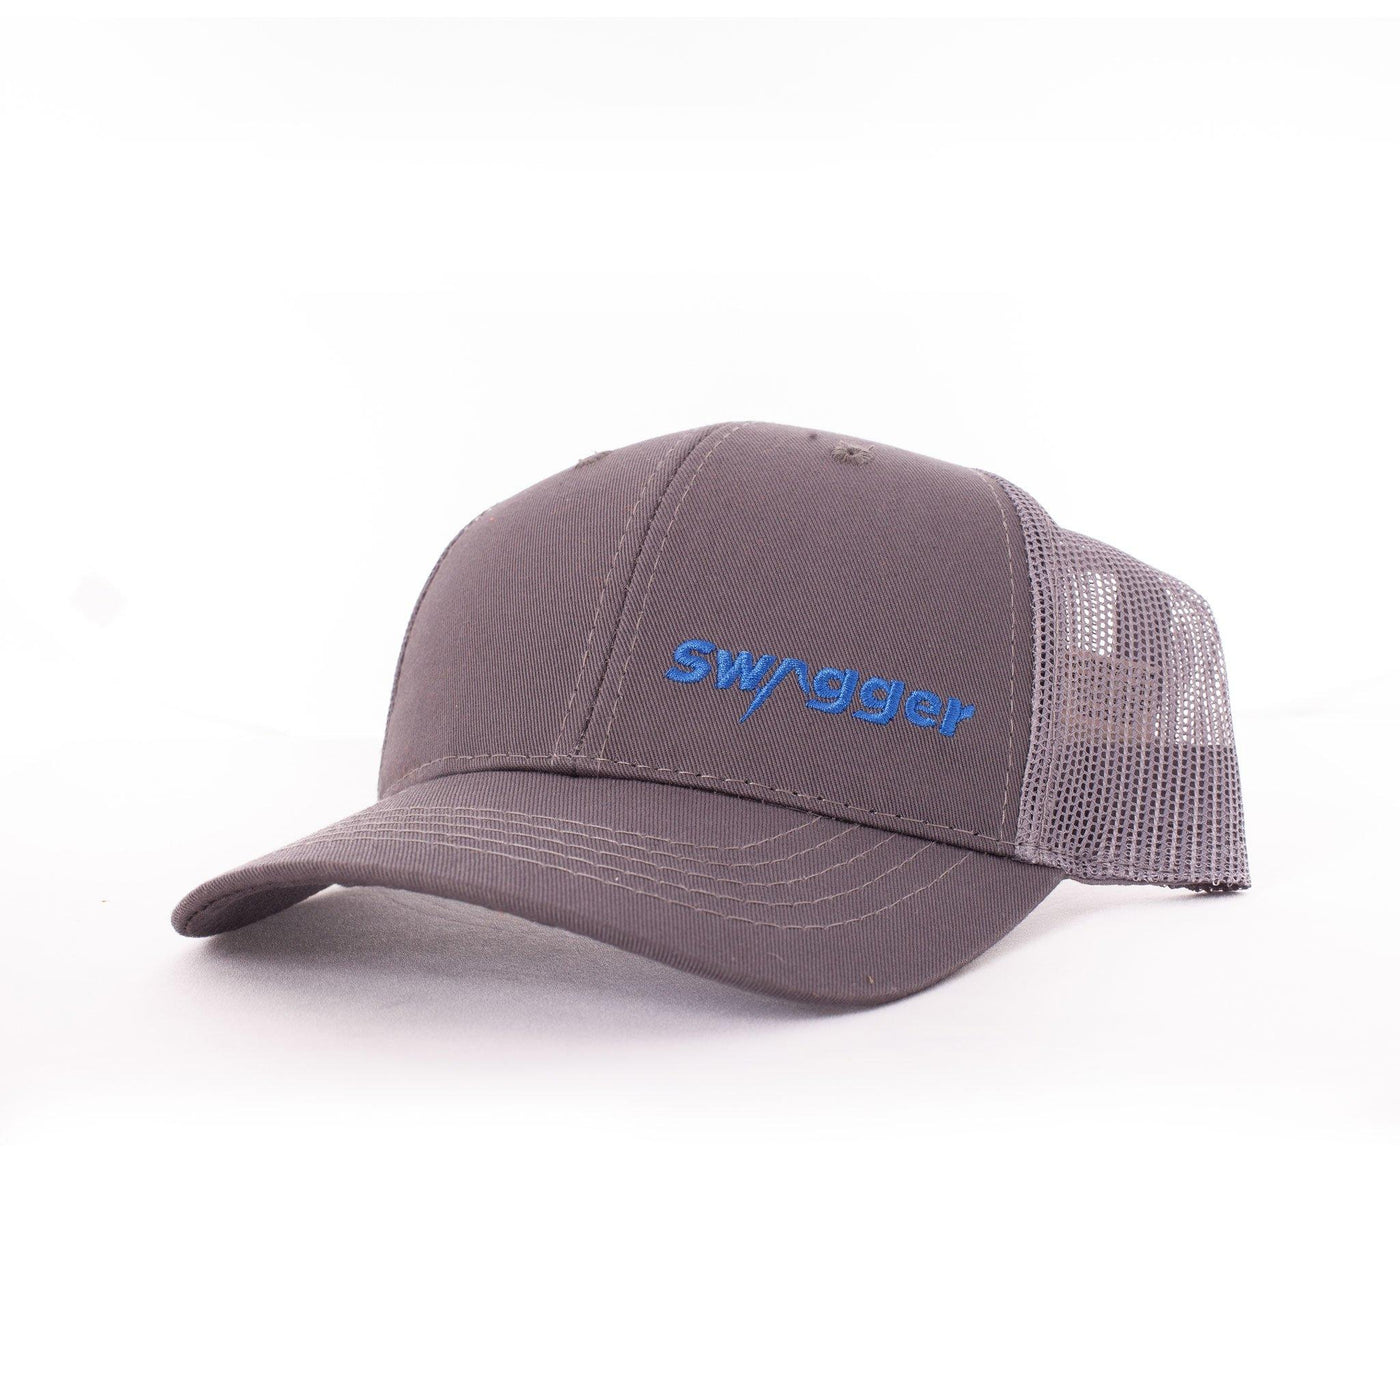 Gray swagger bipod logo hat